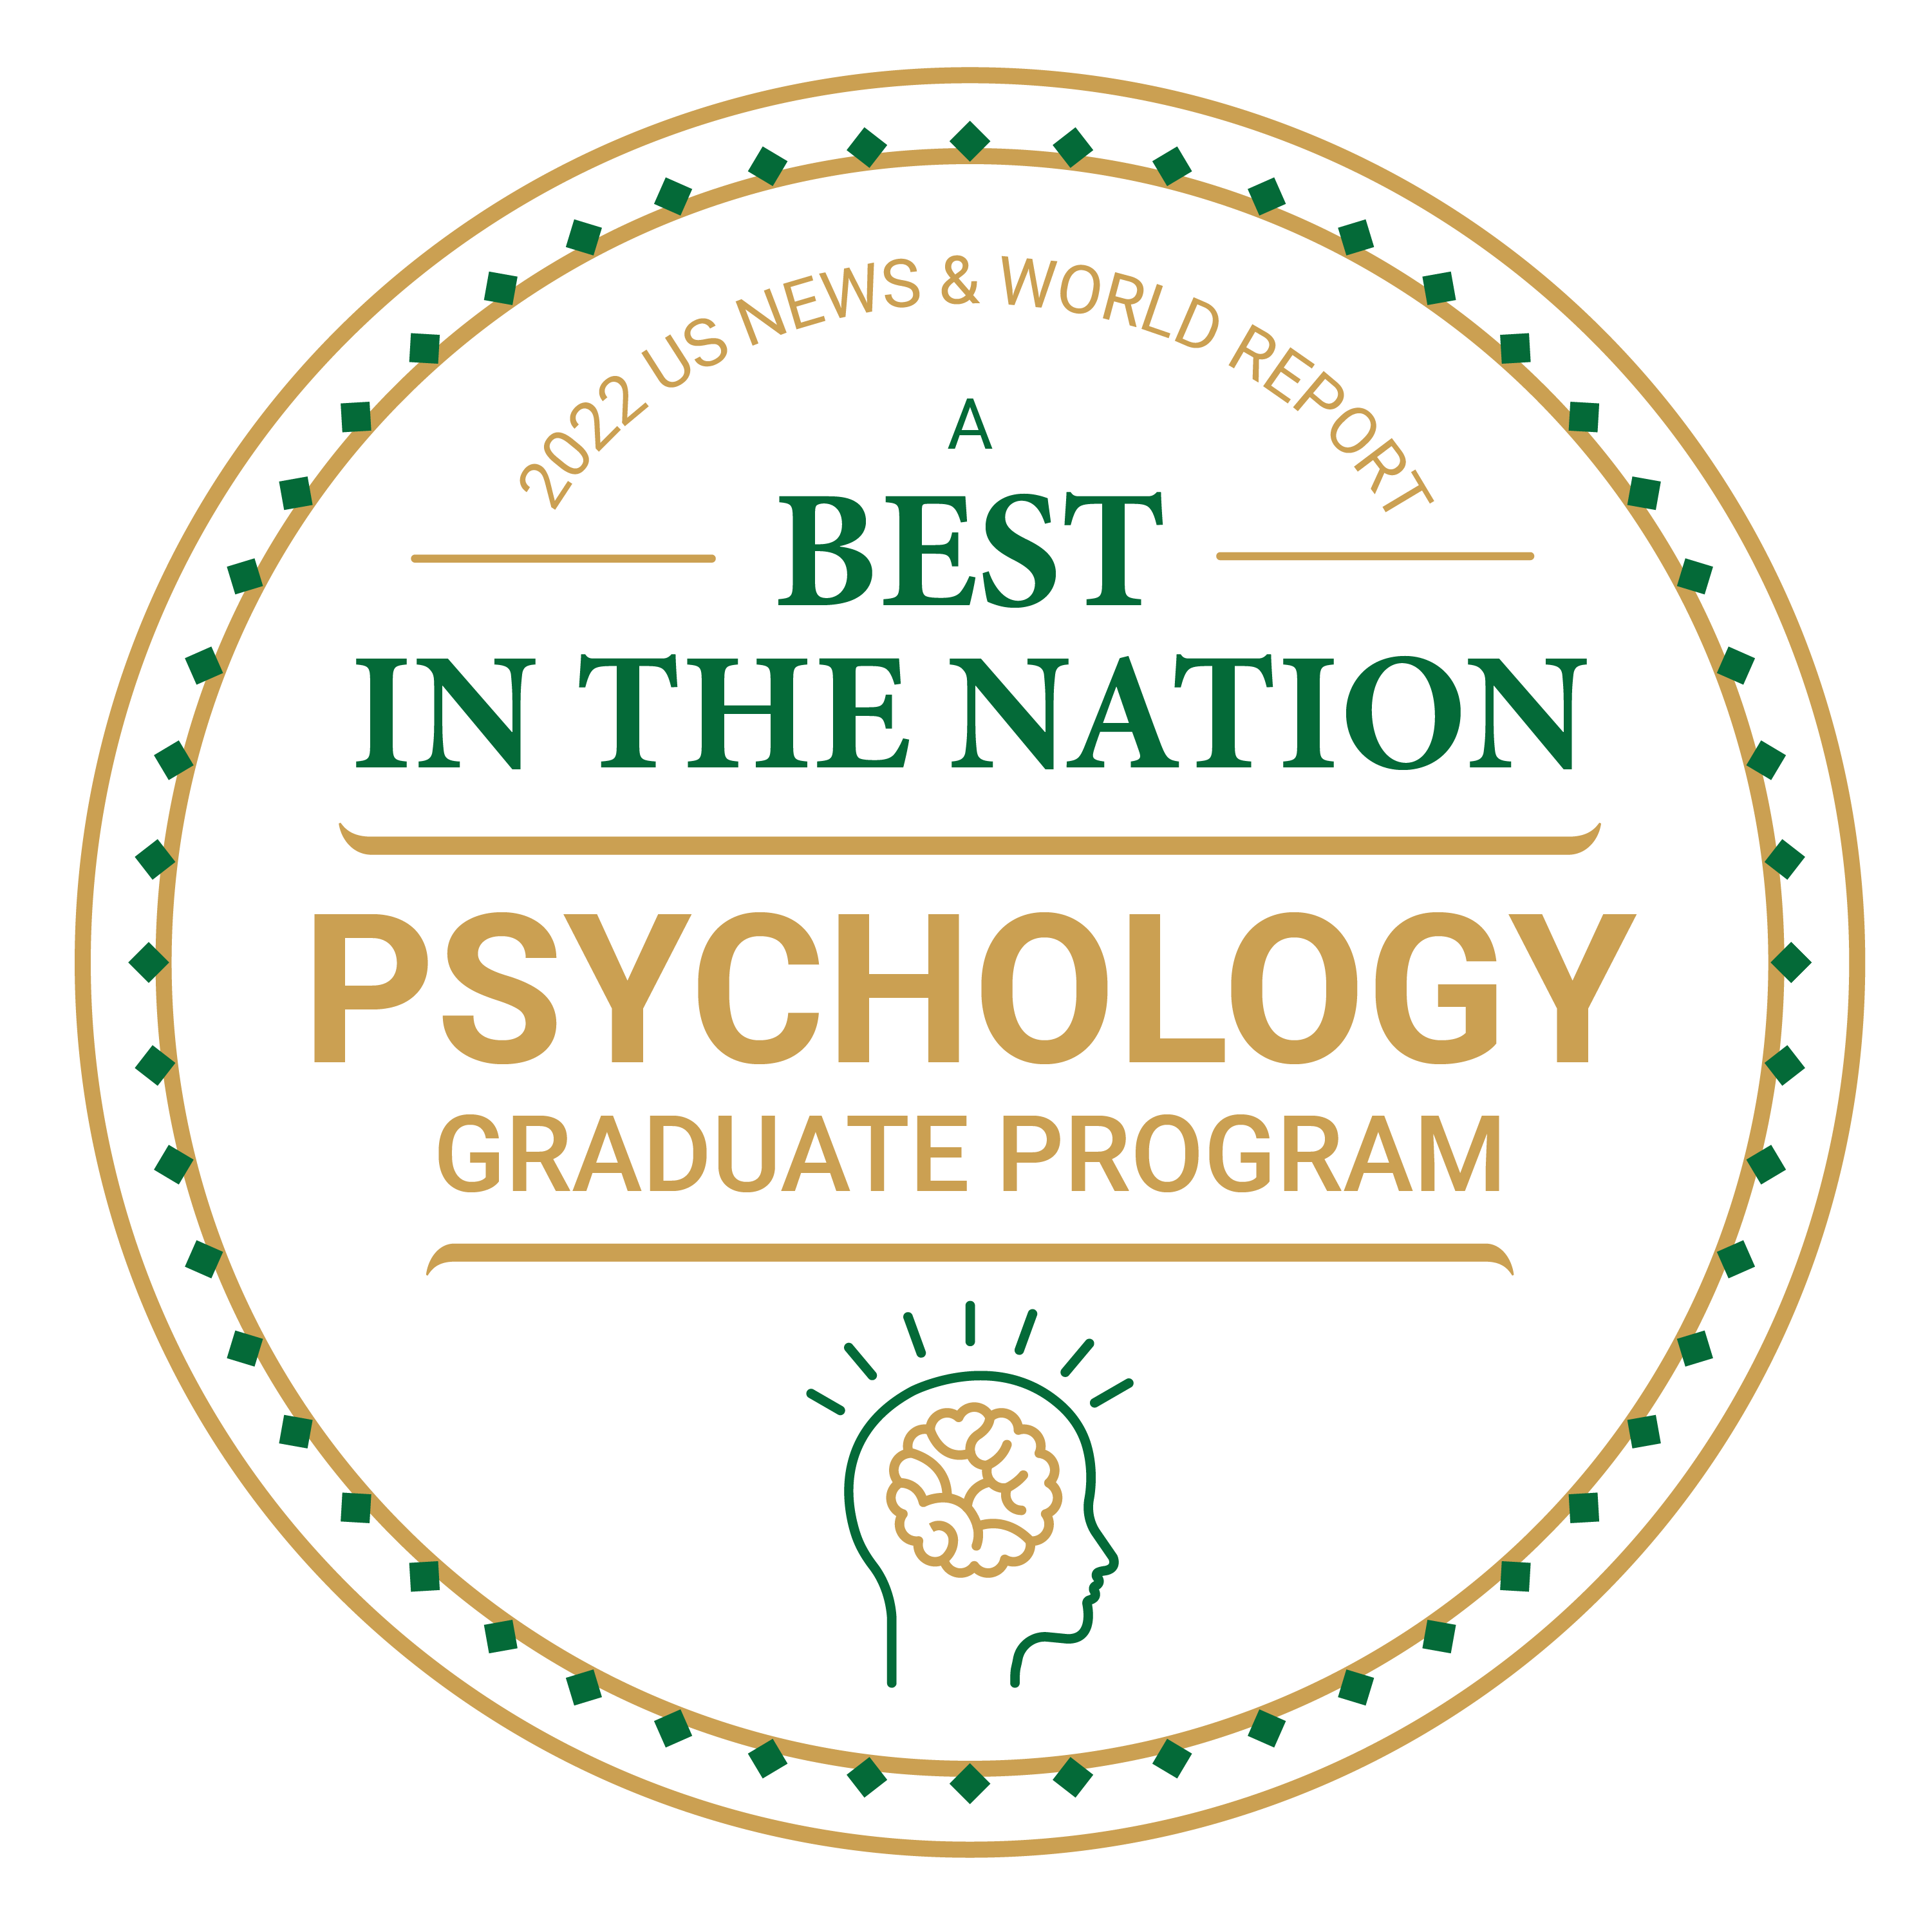 2022 U.S. News & World Report A Best in the Nation Psychology Graduate Progam